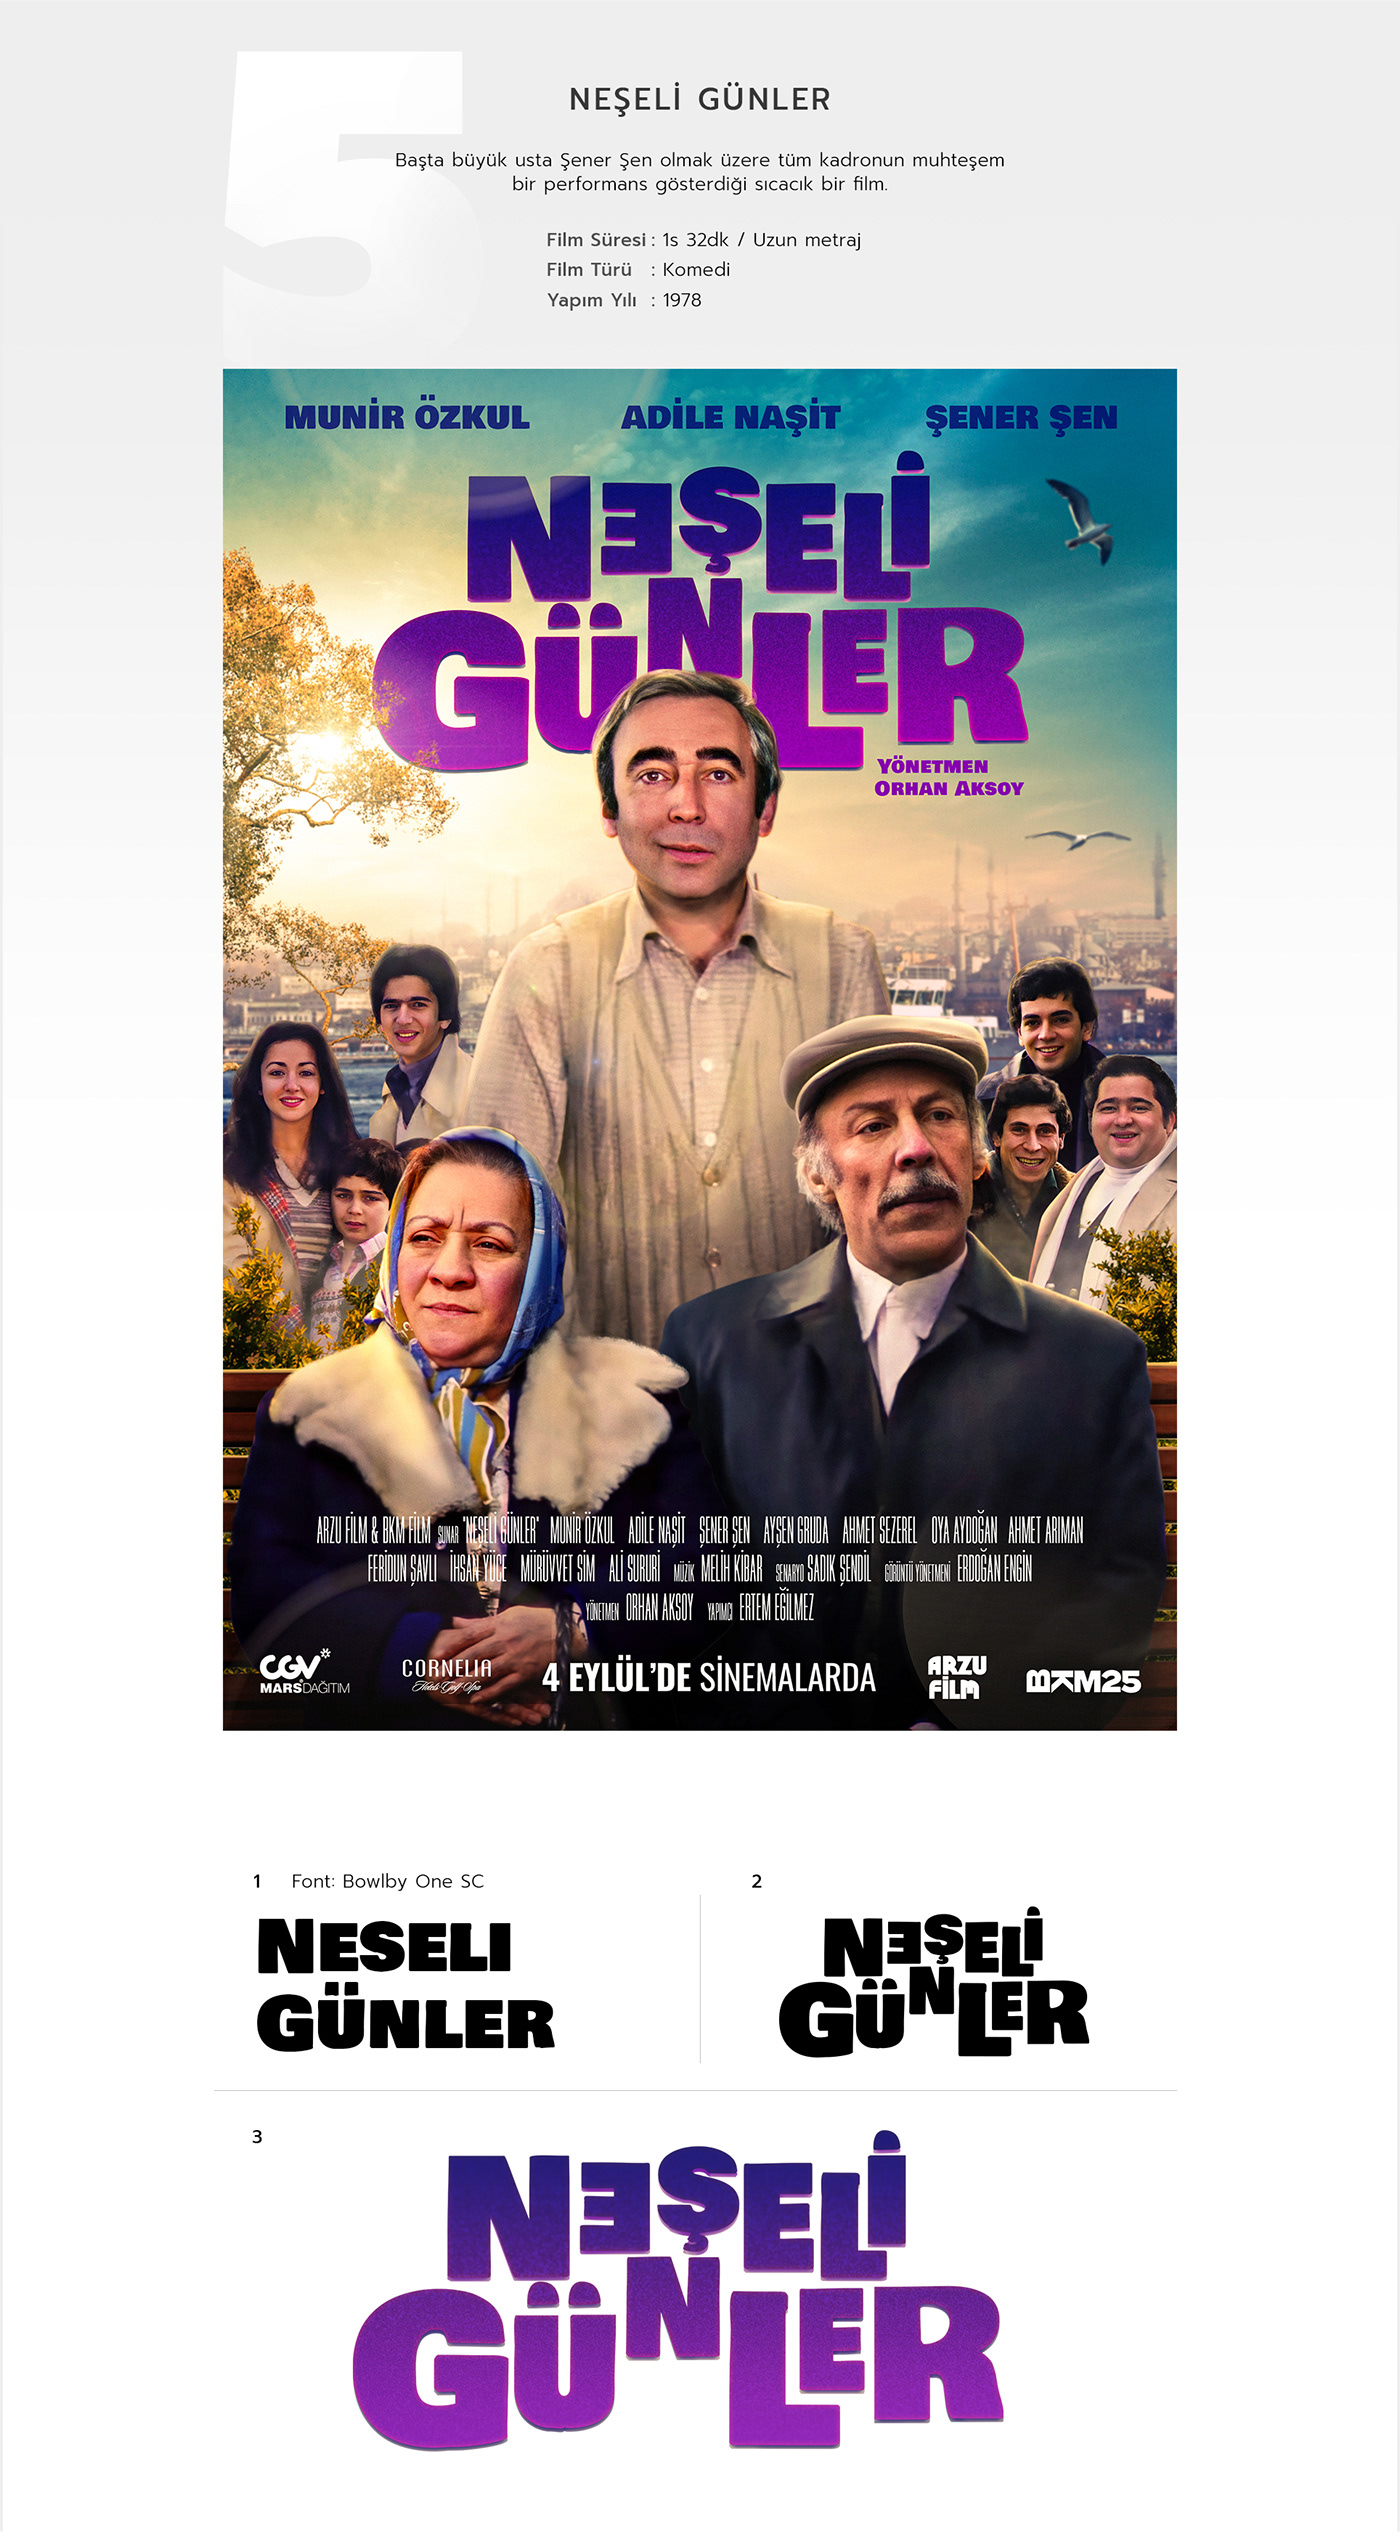 80s Afiş Cinema poster key art movie movie pposter poster yeşilçam